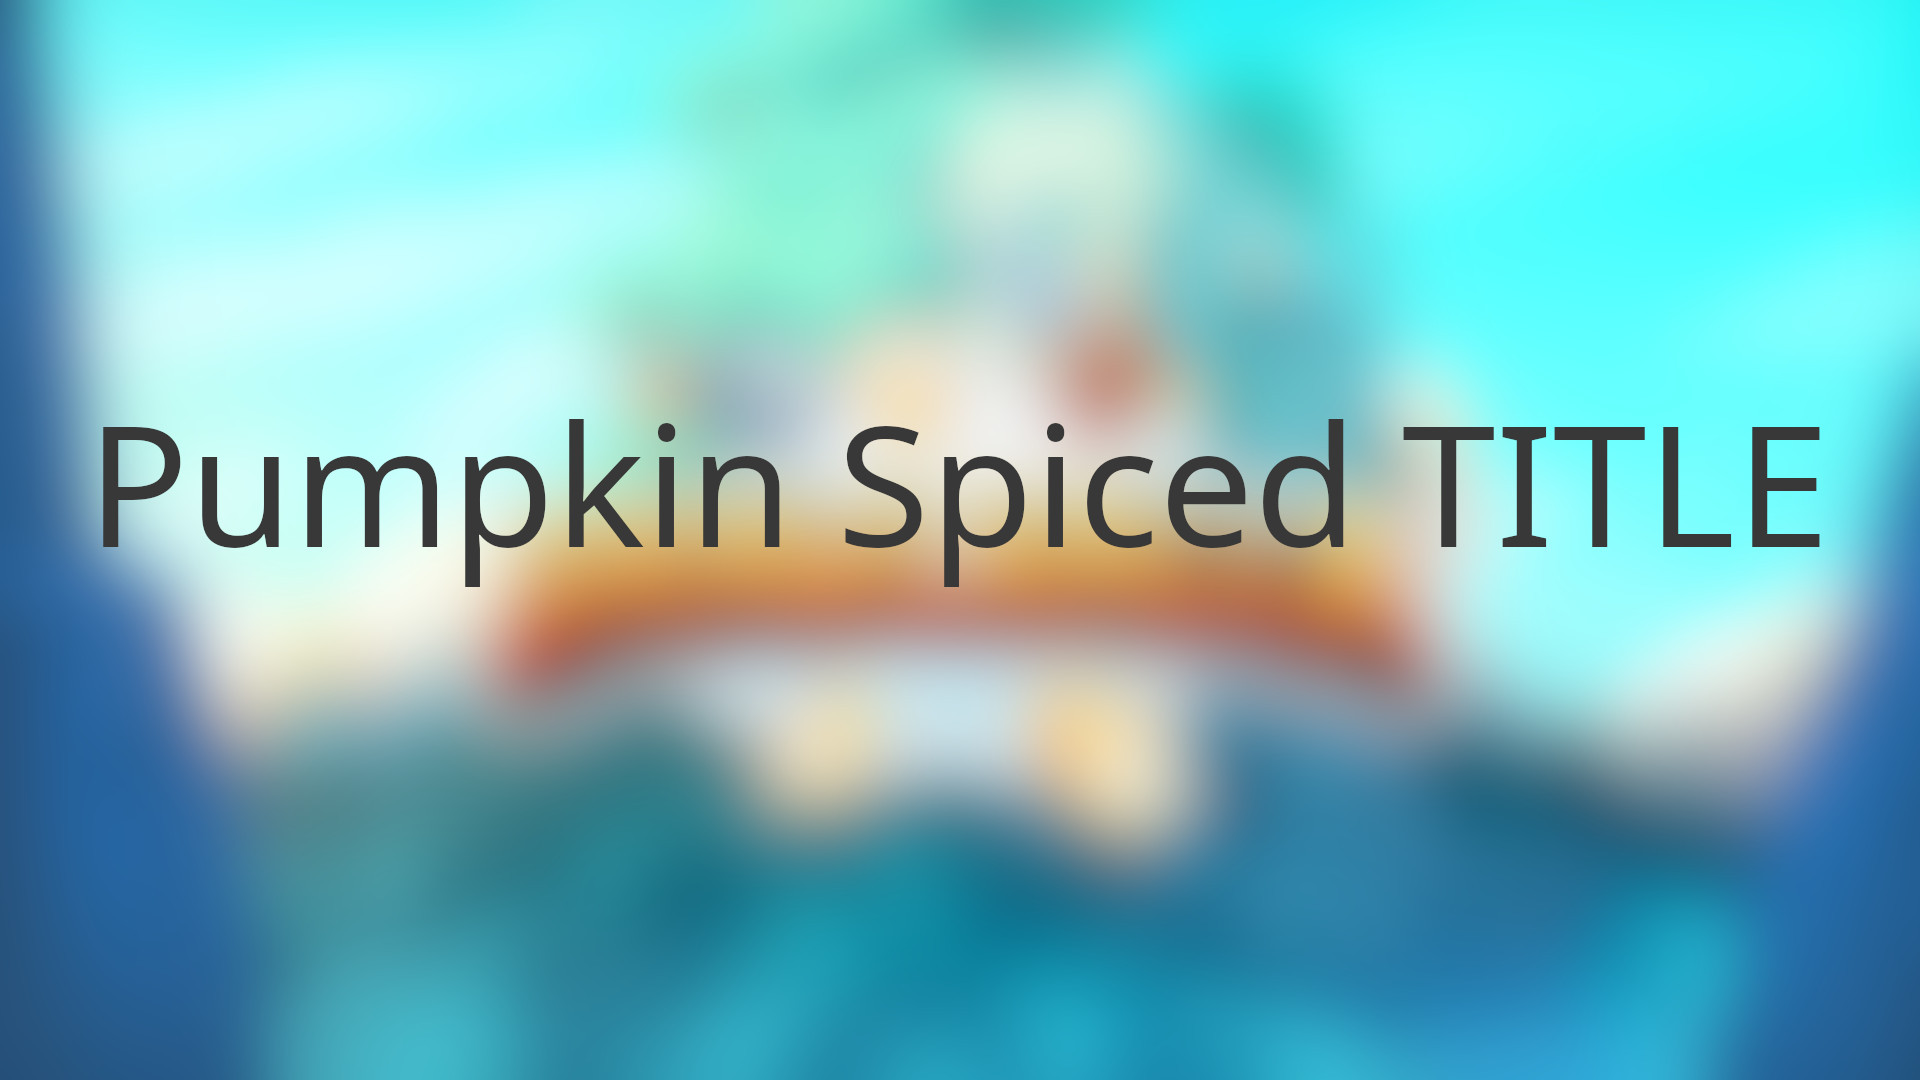 Brawlhalla - Pumpkin Spiced Title DLC CD Key 0.29 usd